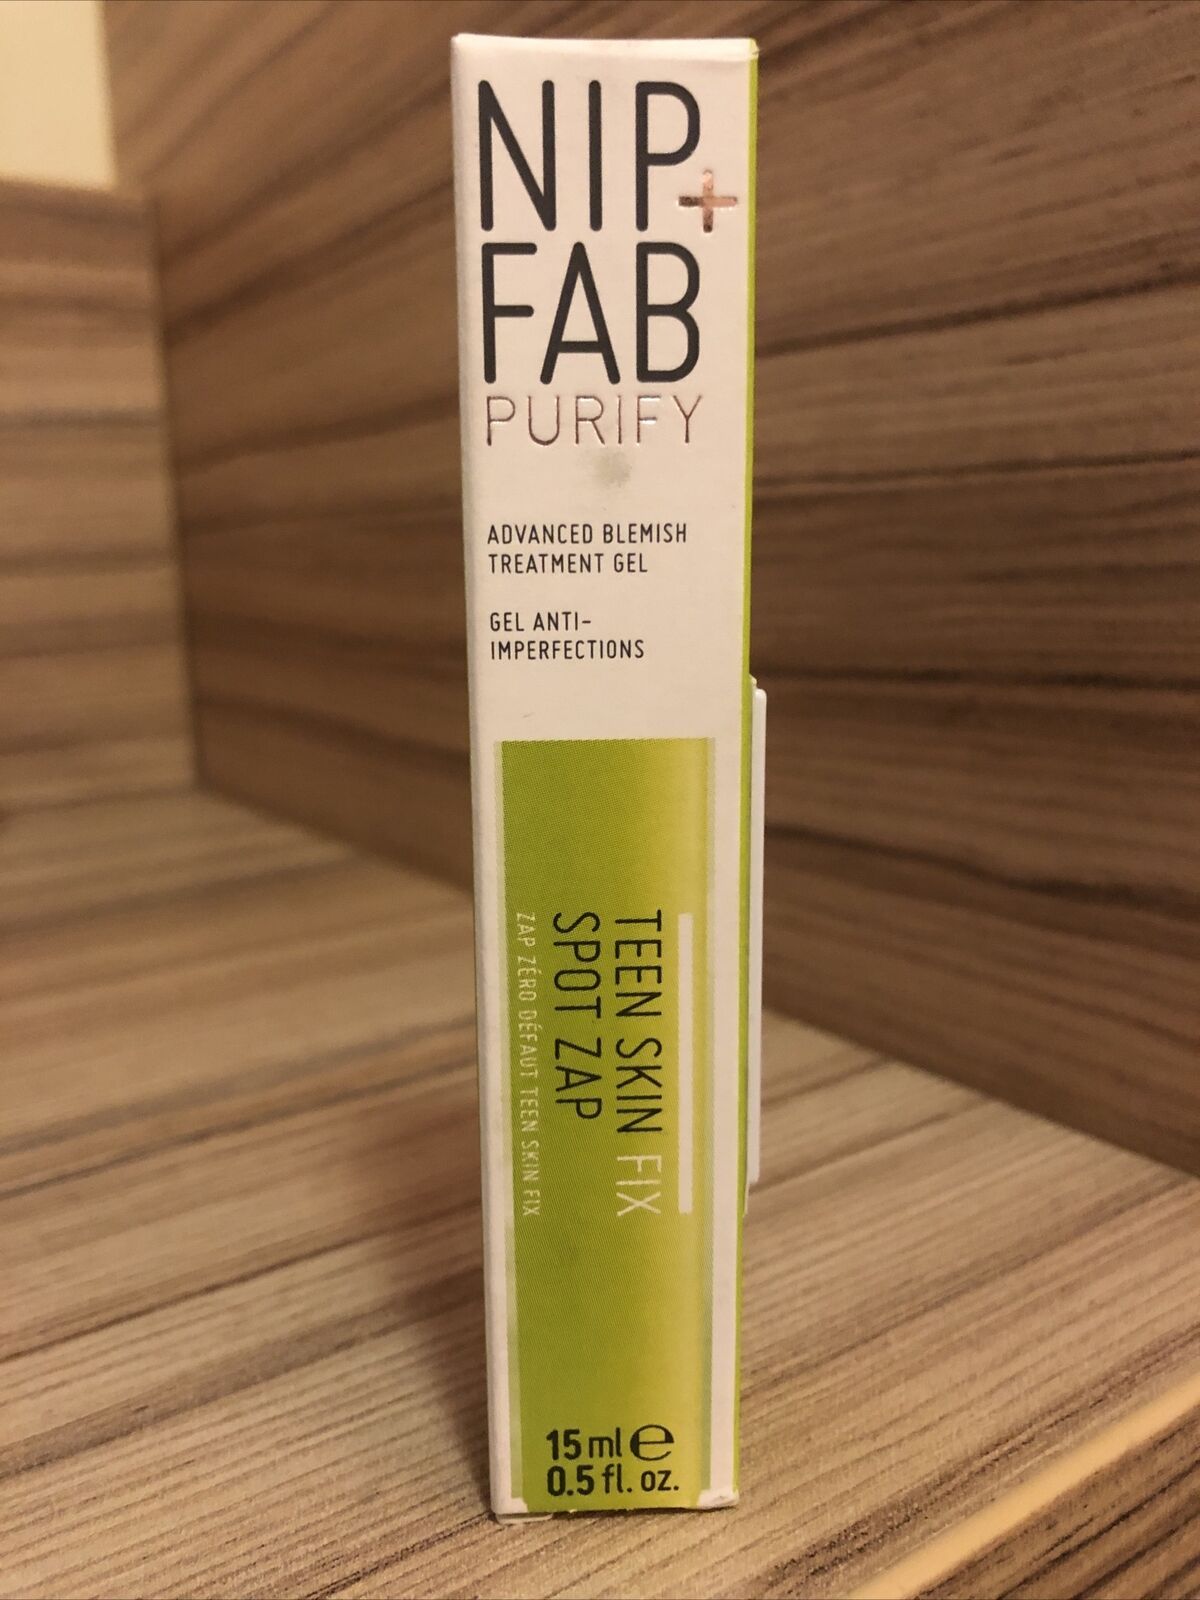 Nip + Fab Purify Teen Skin Fix Spot Zap - $14.84